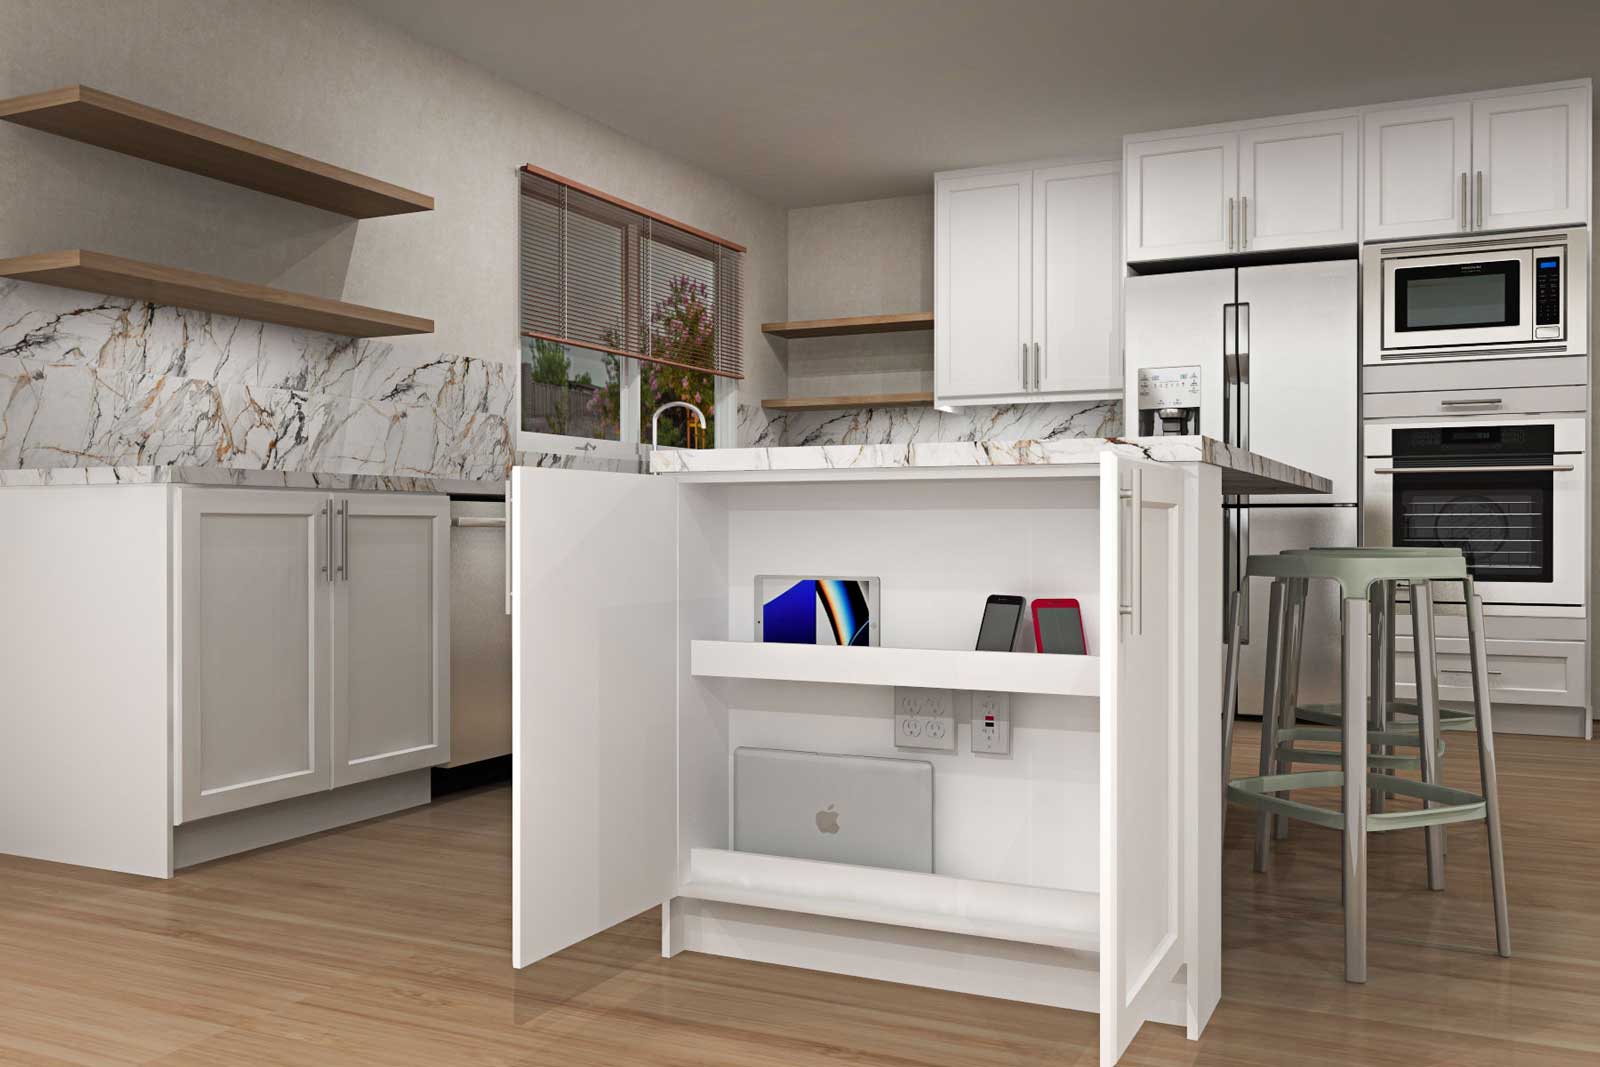 IKEA kitchen with open storage cabinet